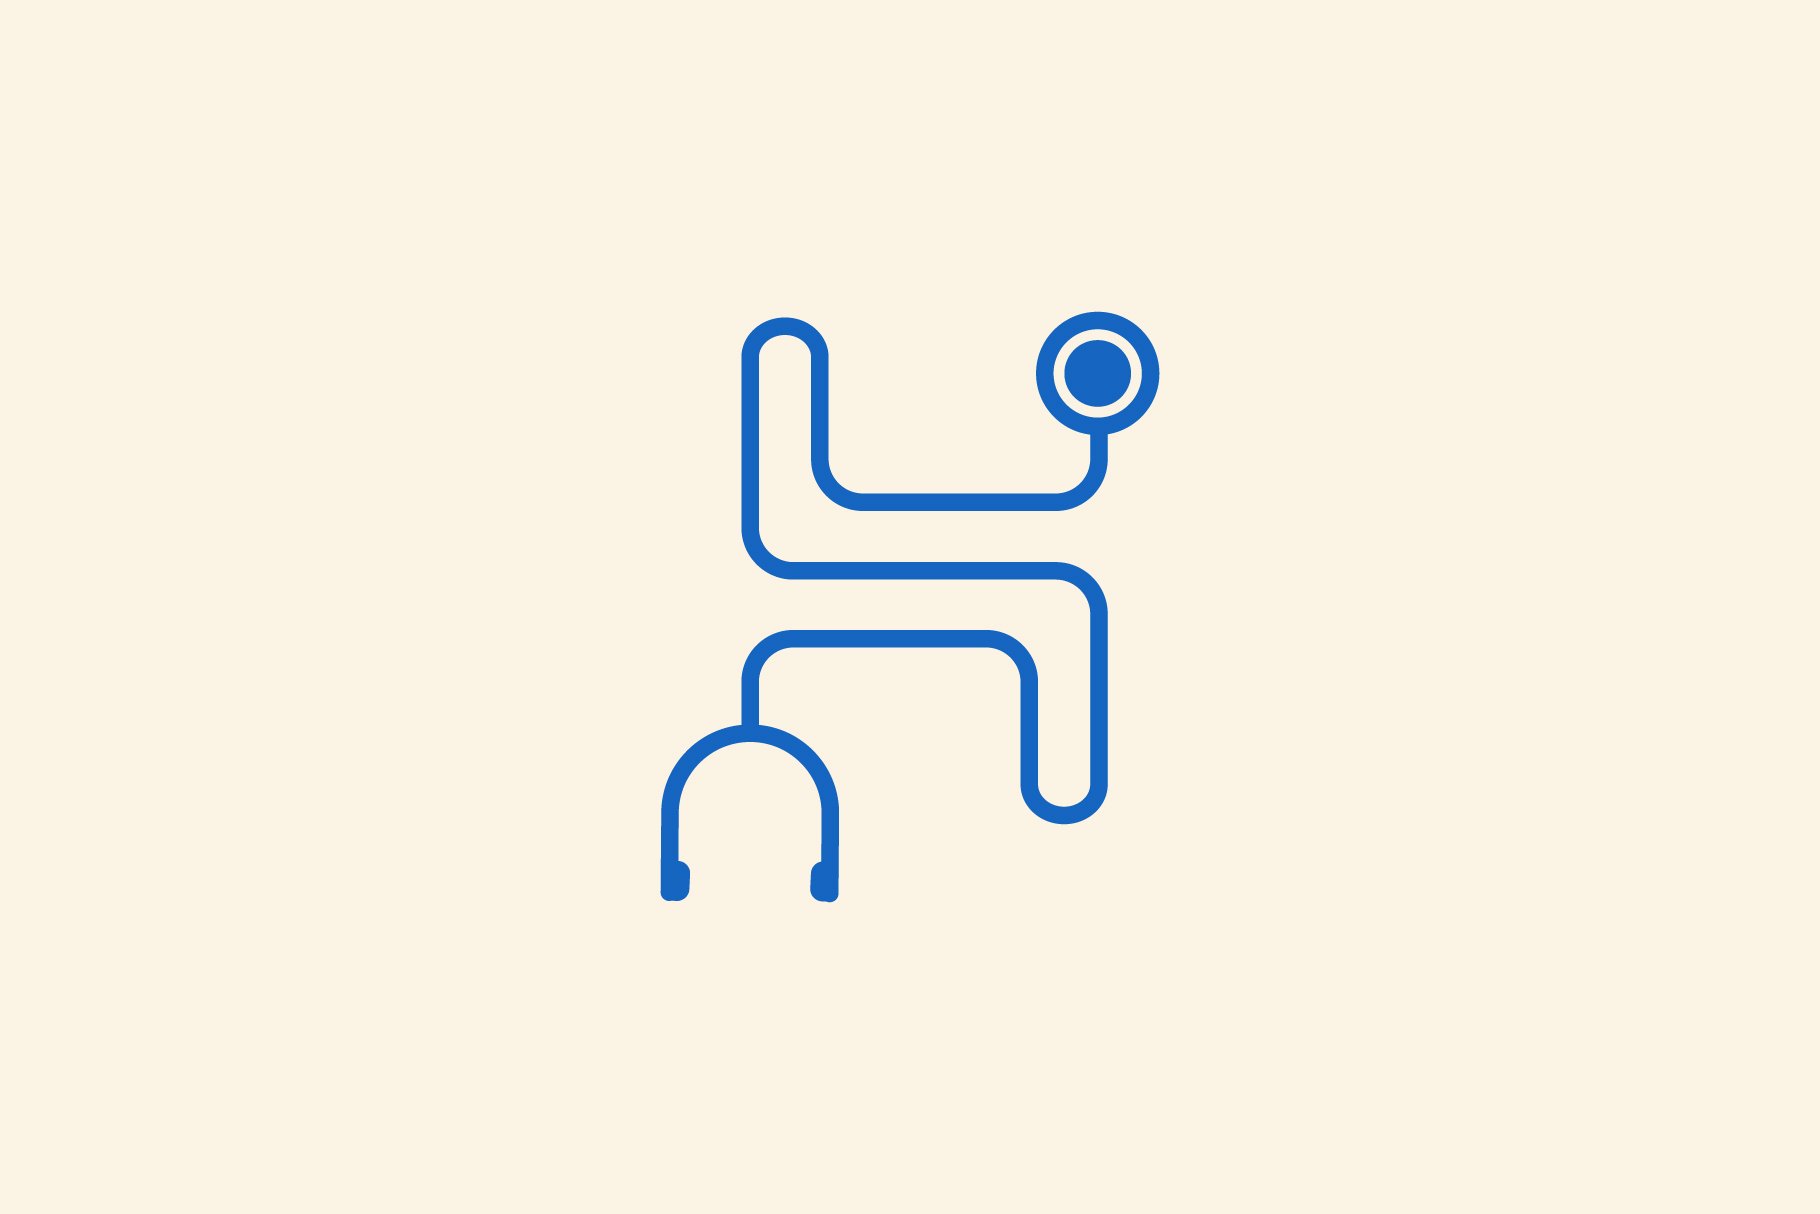 Stethoscope h letter logo vector cover image.